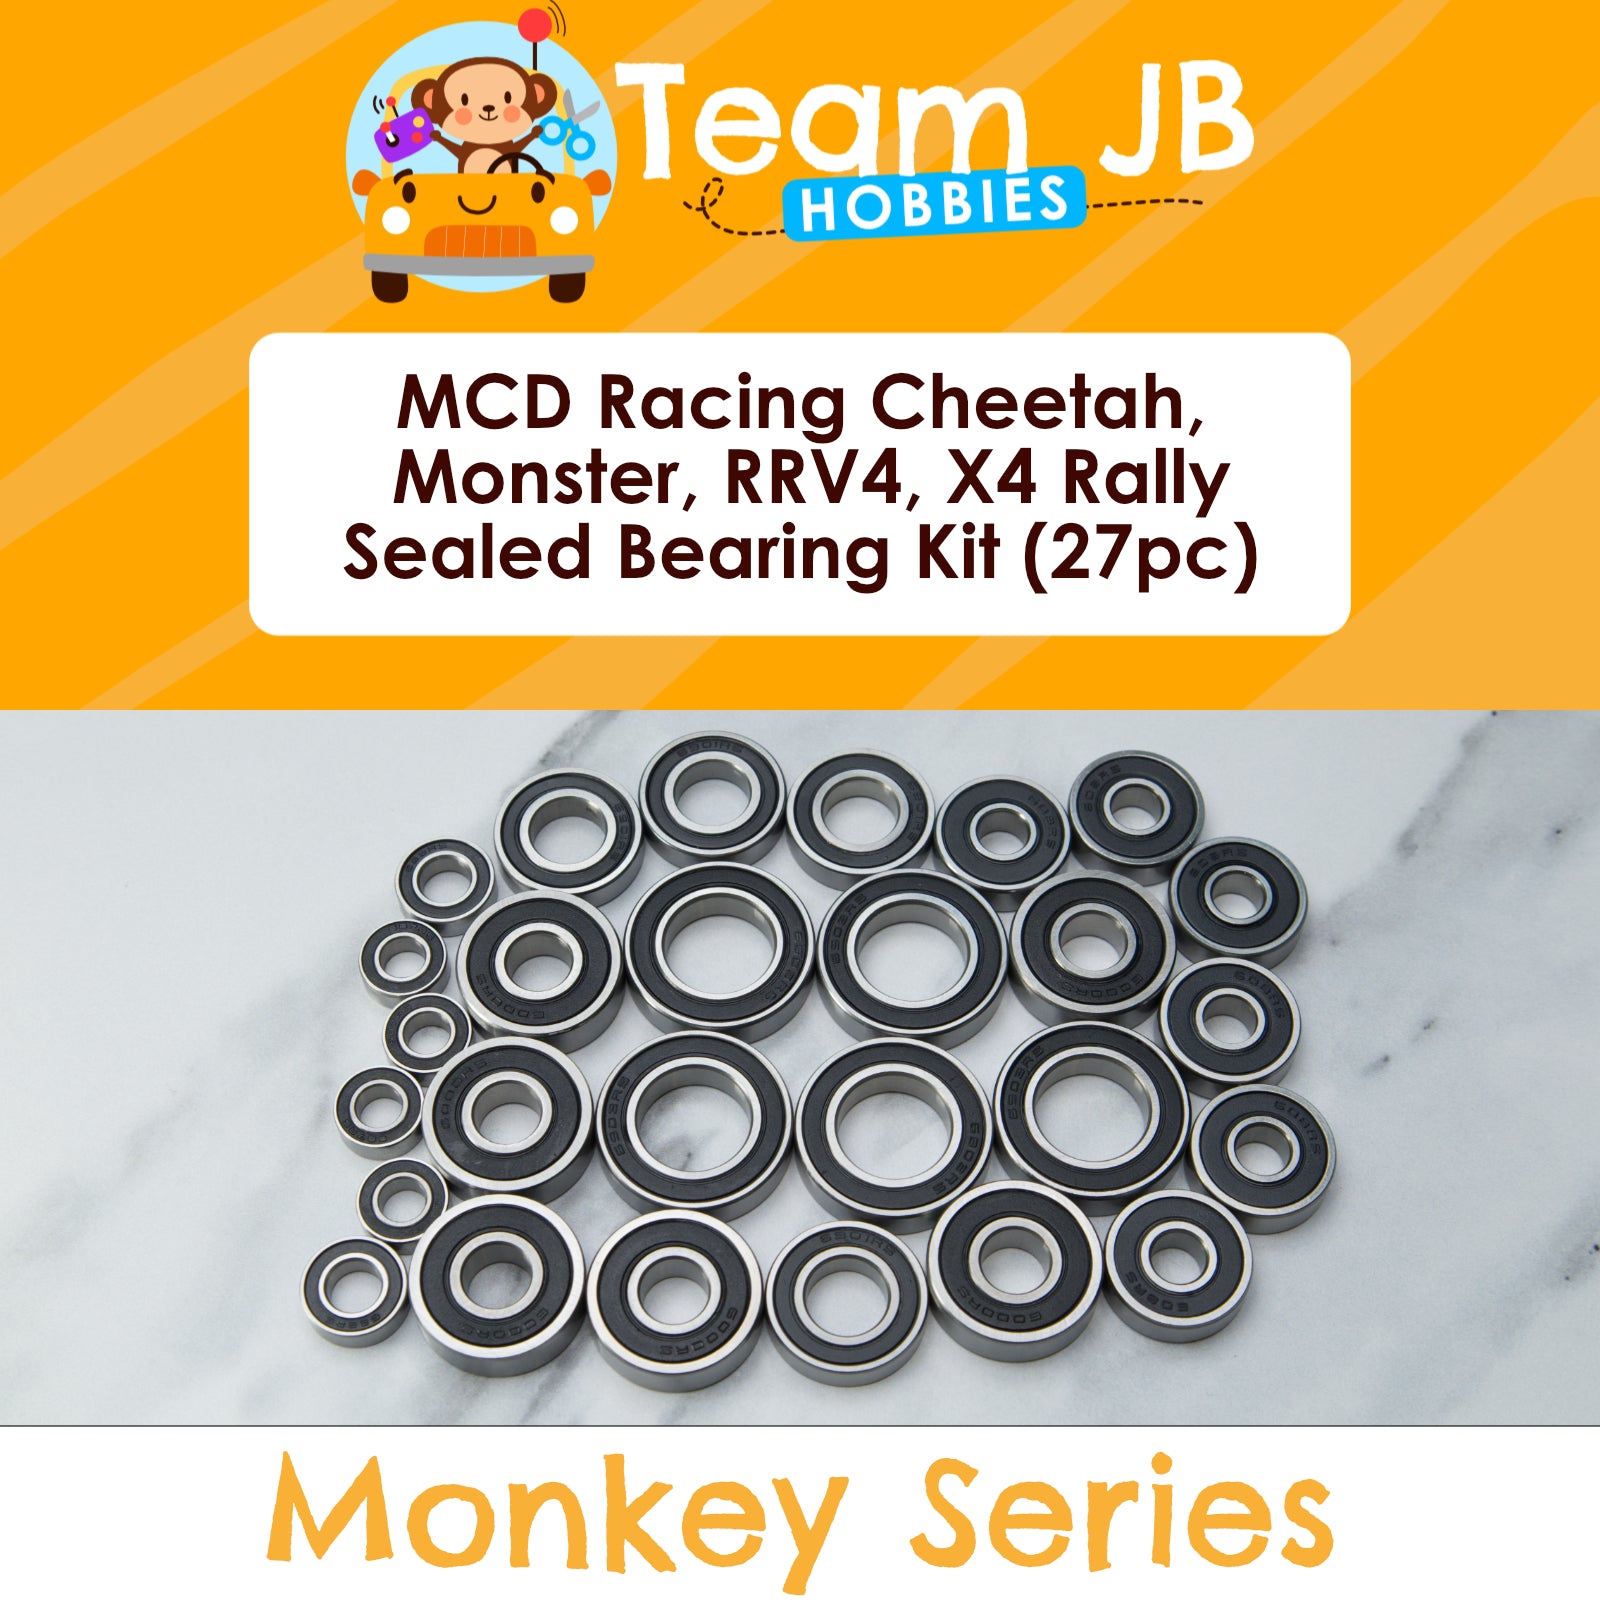 MCD Racing Cheetah MT V4, Monster V4, RRV4, X4 Rally - Sealed Bearing Kit